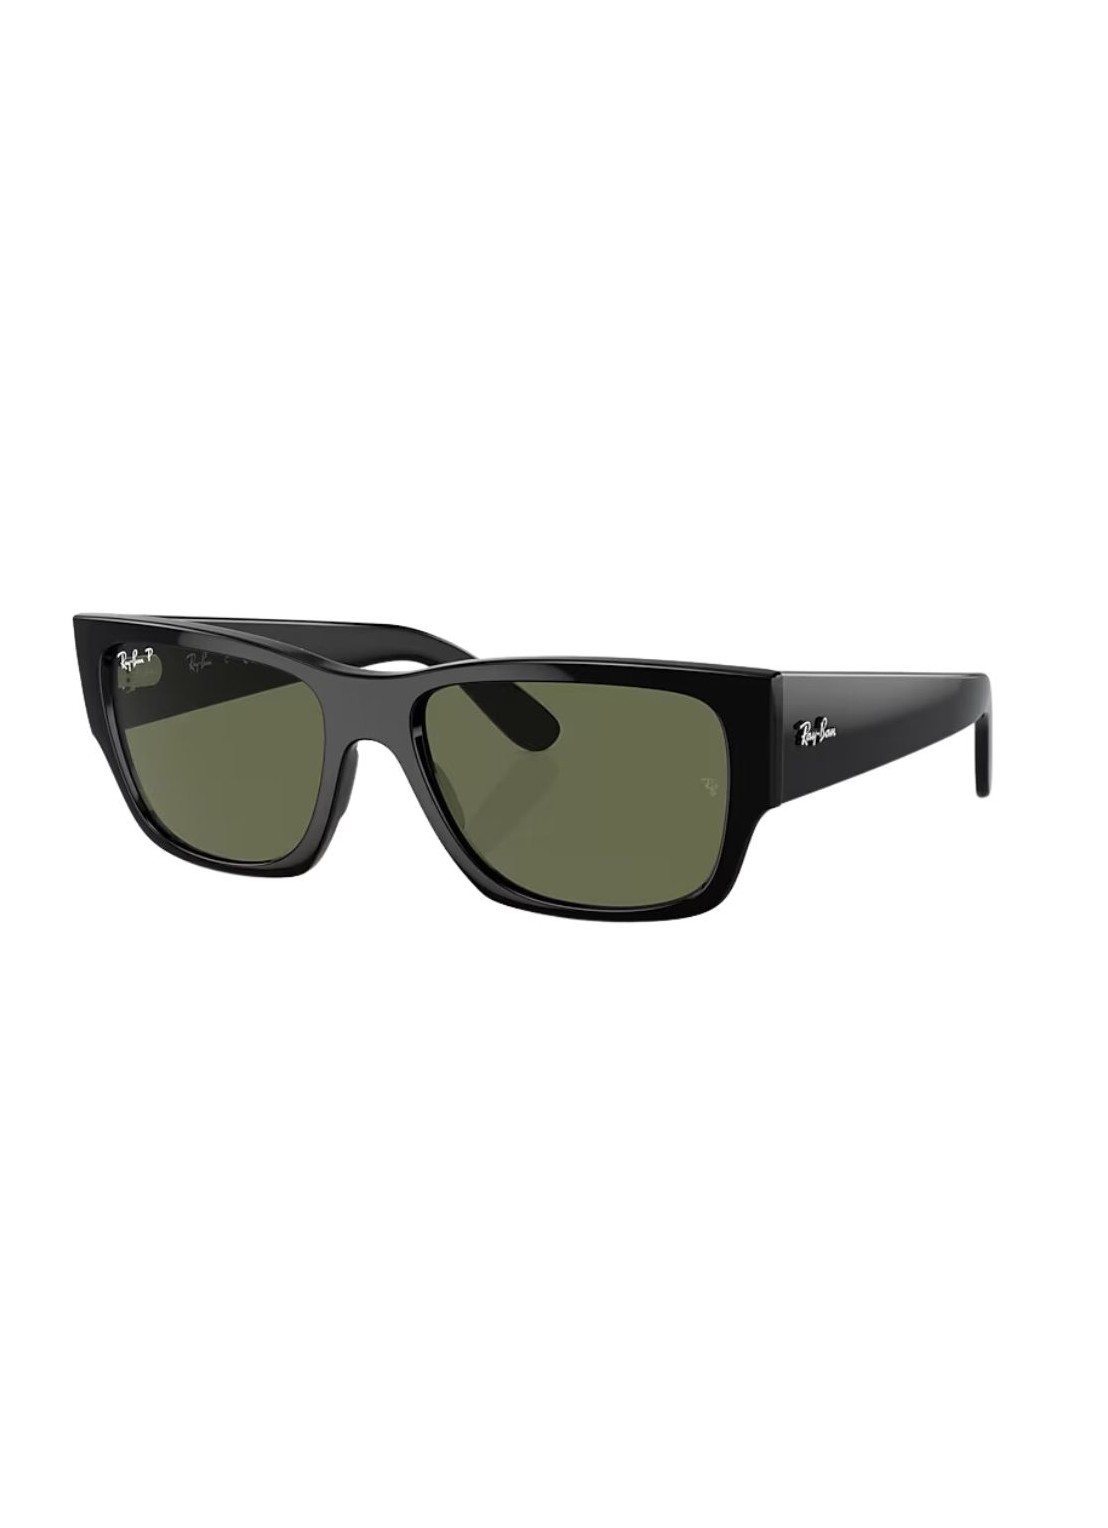 Gafas rayban sunglasses unisex0rb0947s - 0rb0947s 901/58 talla 56
 